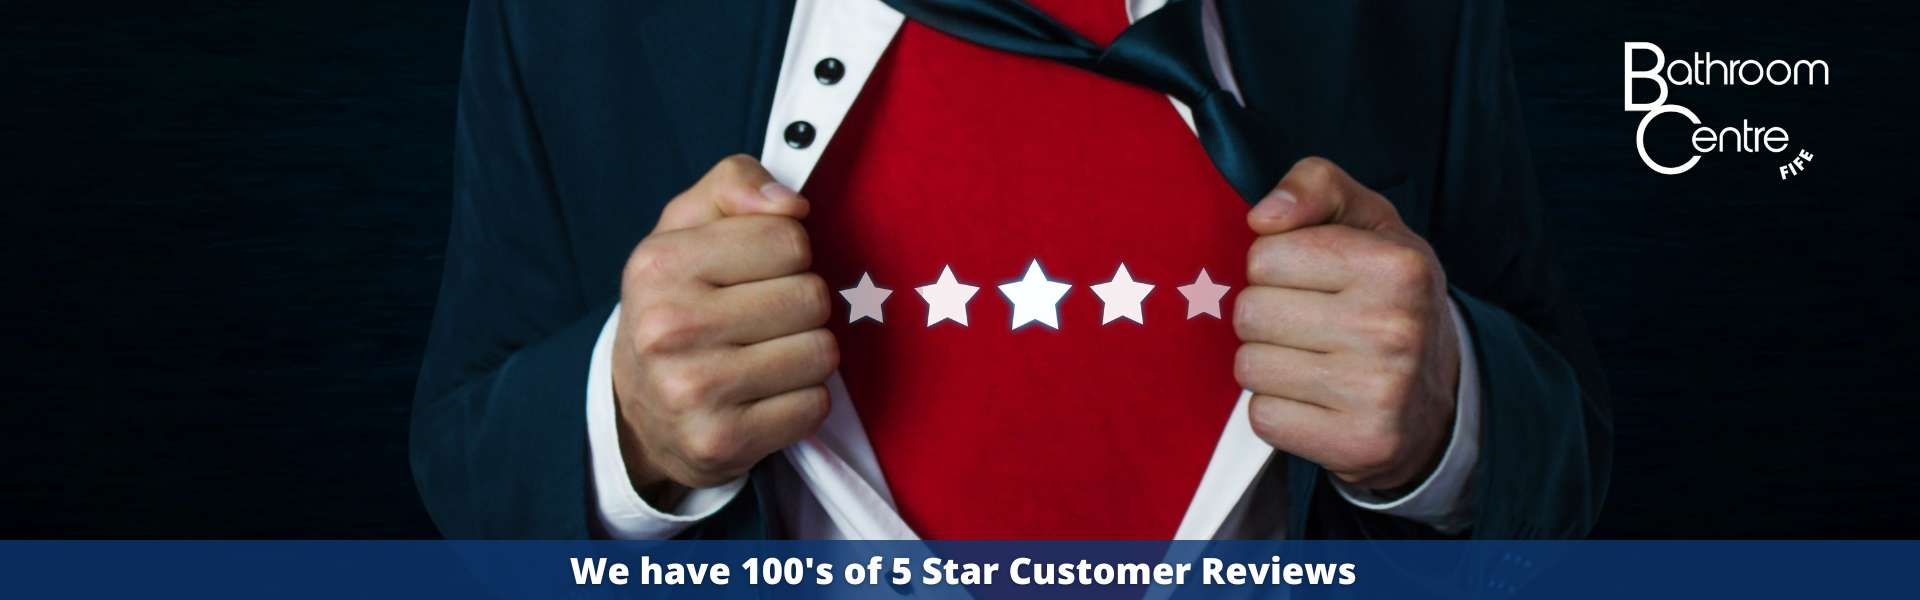 BCF 5 Star Customer Reviews (1920 × 600px)
